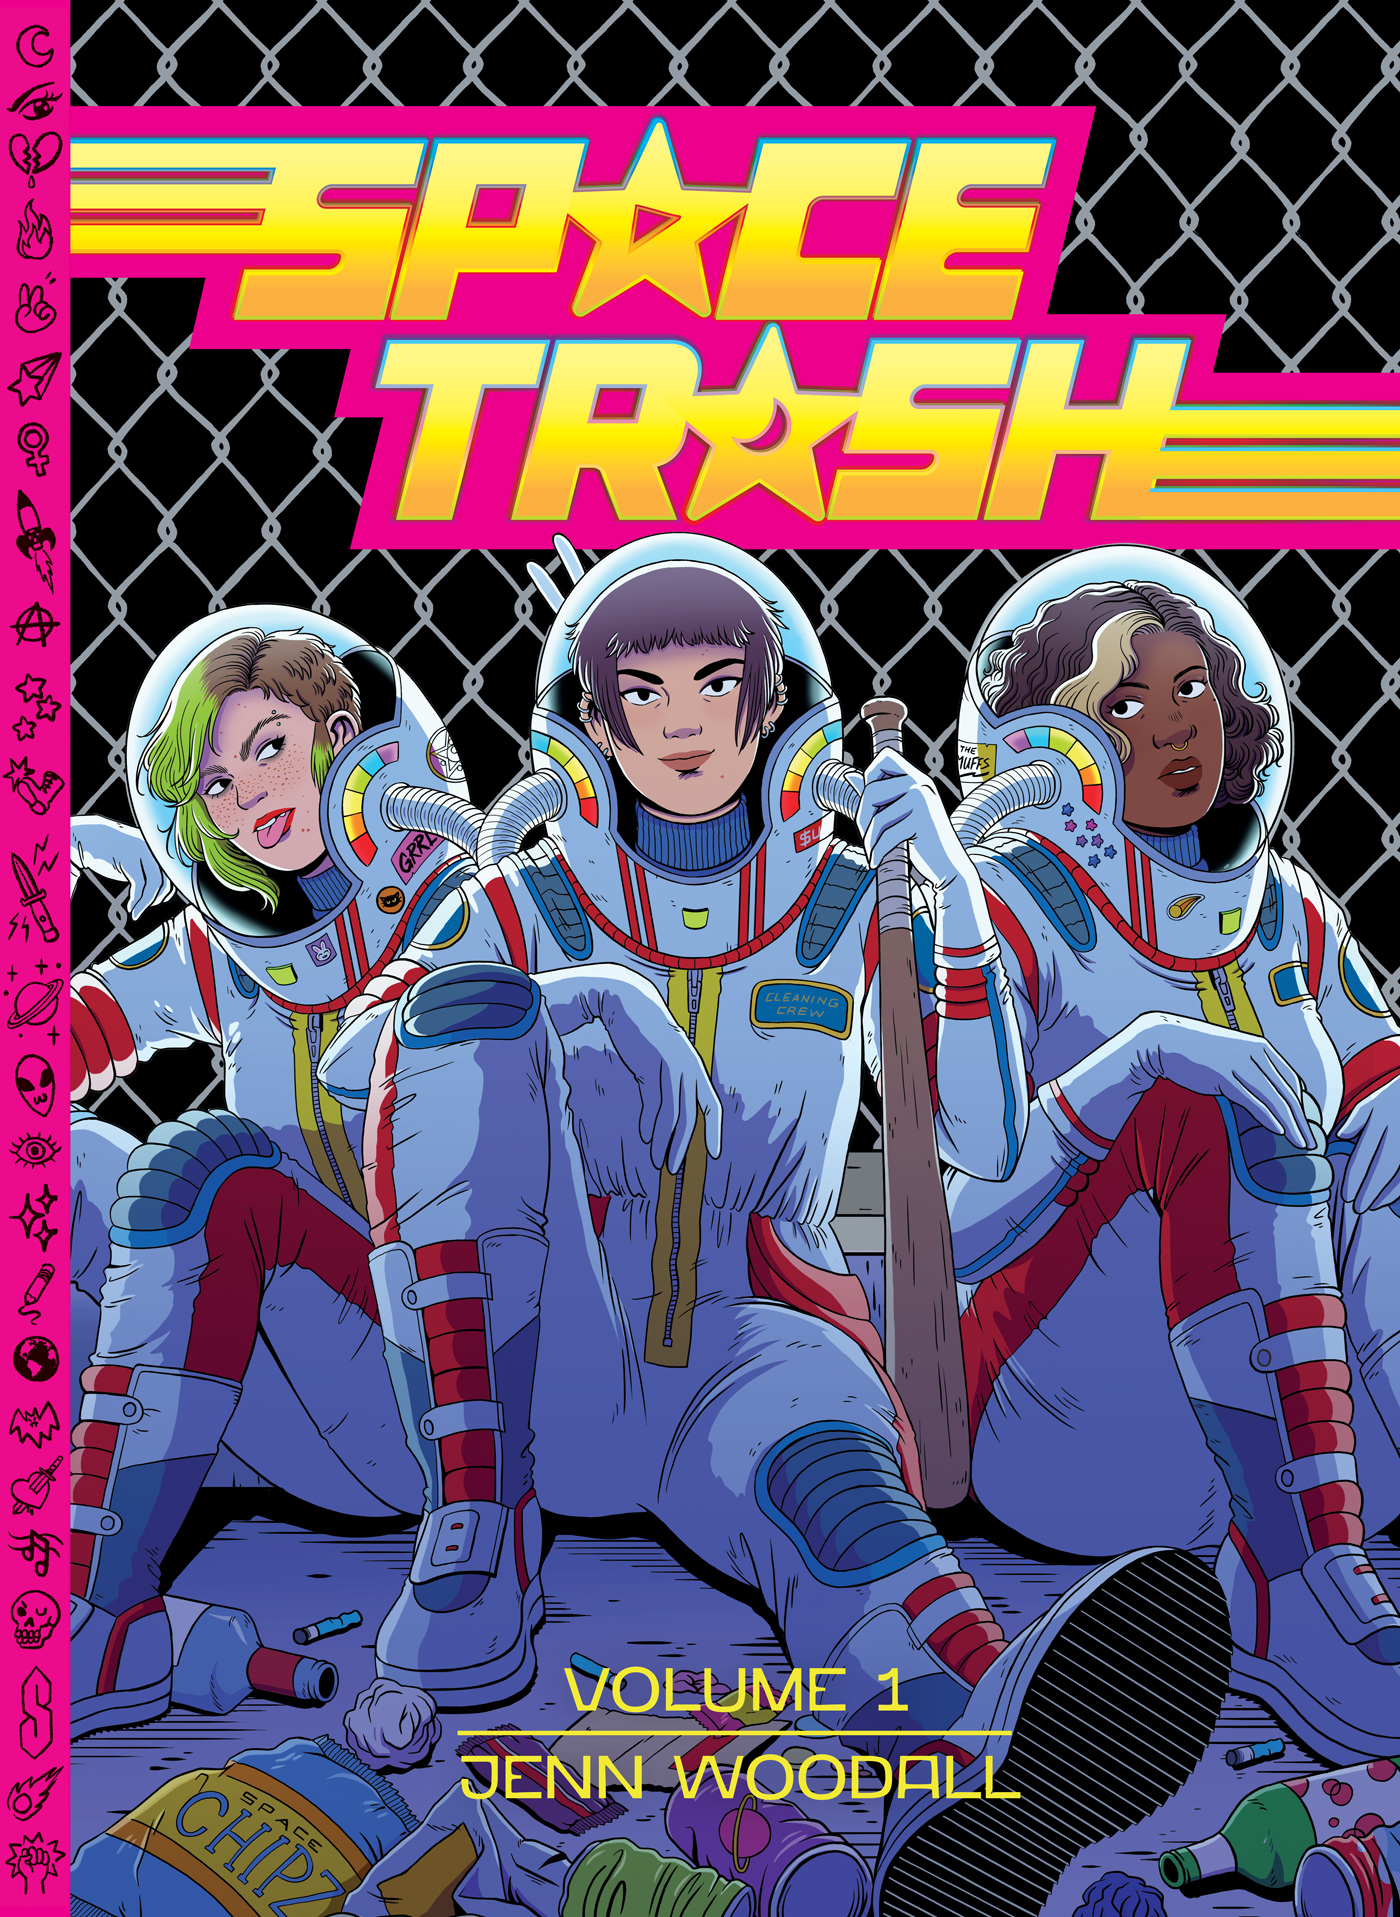 Space Trash Hardcover Volume 1